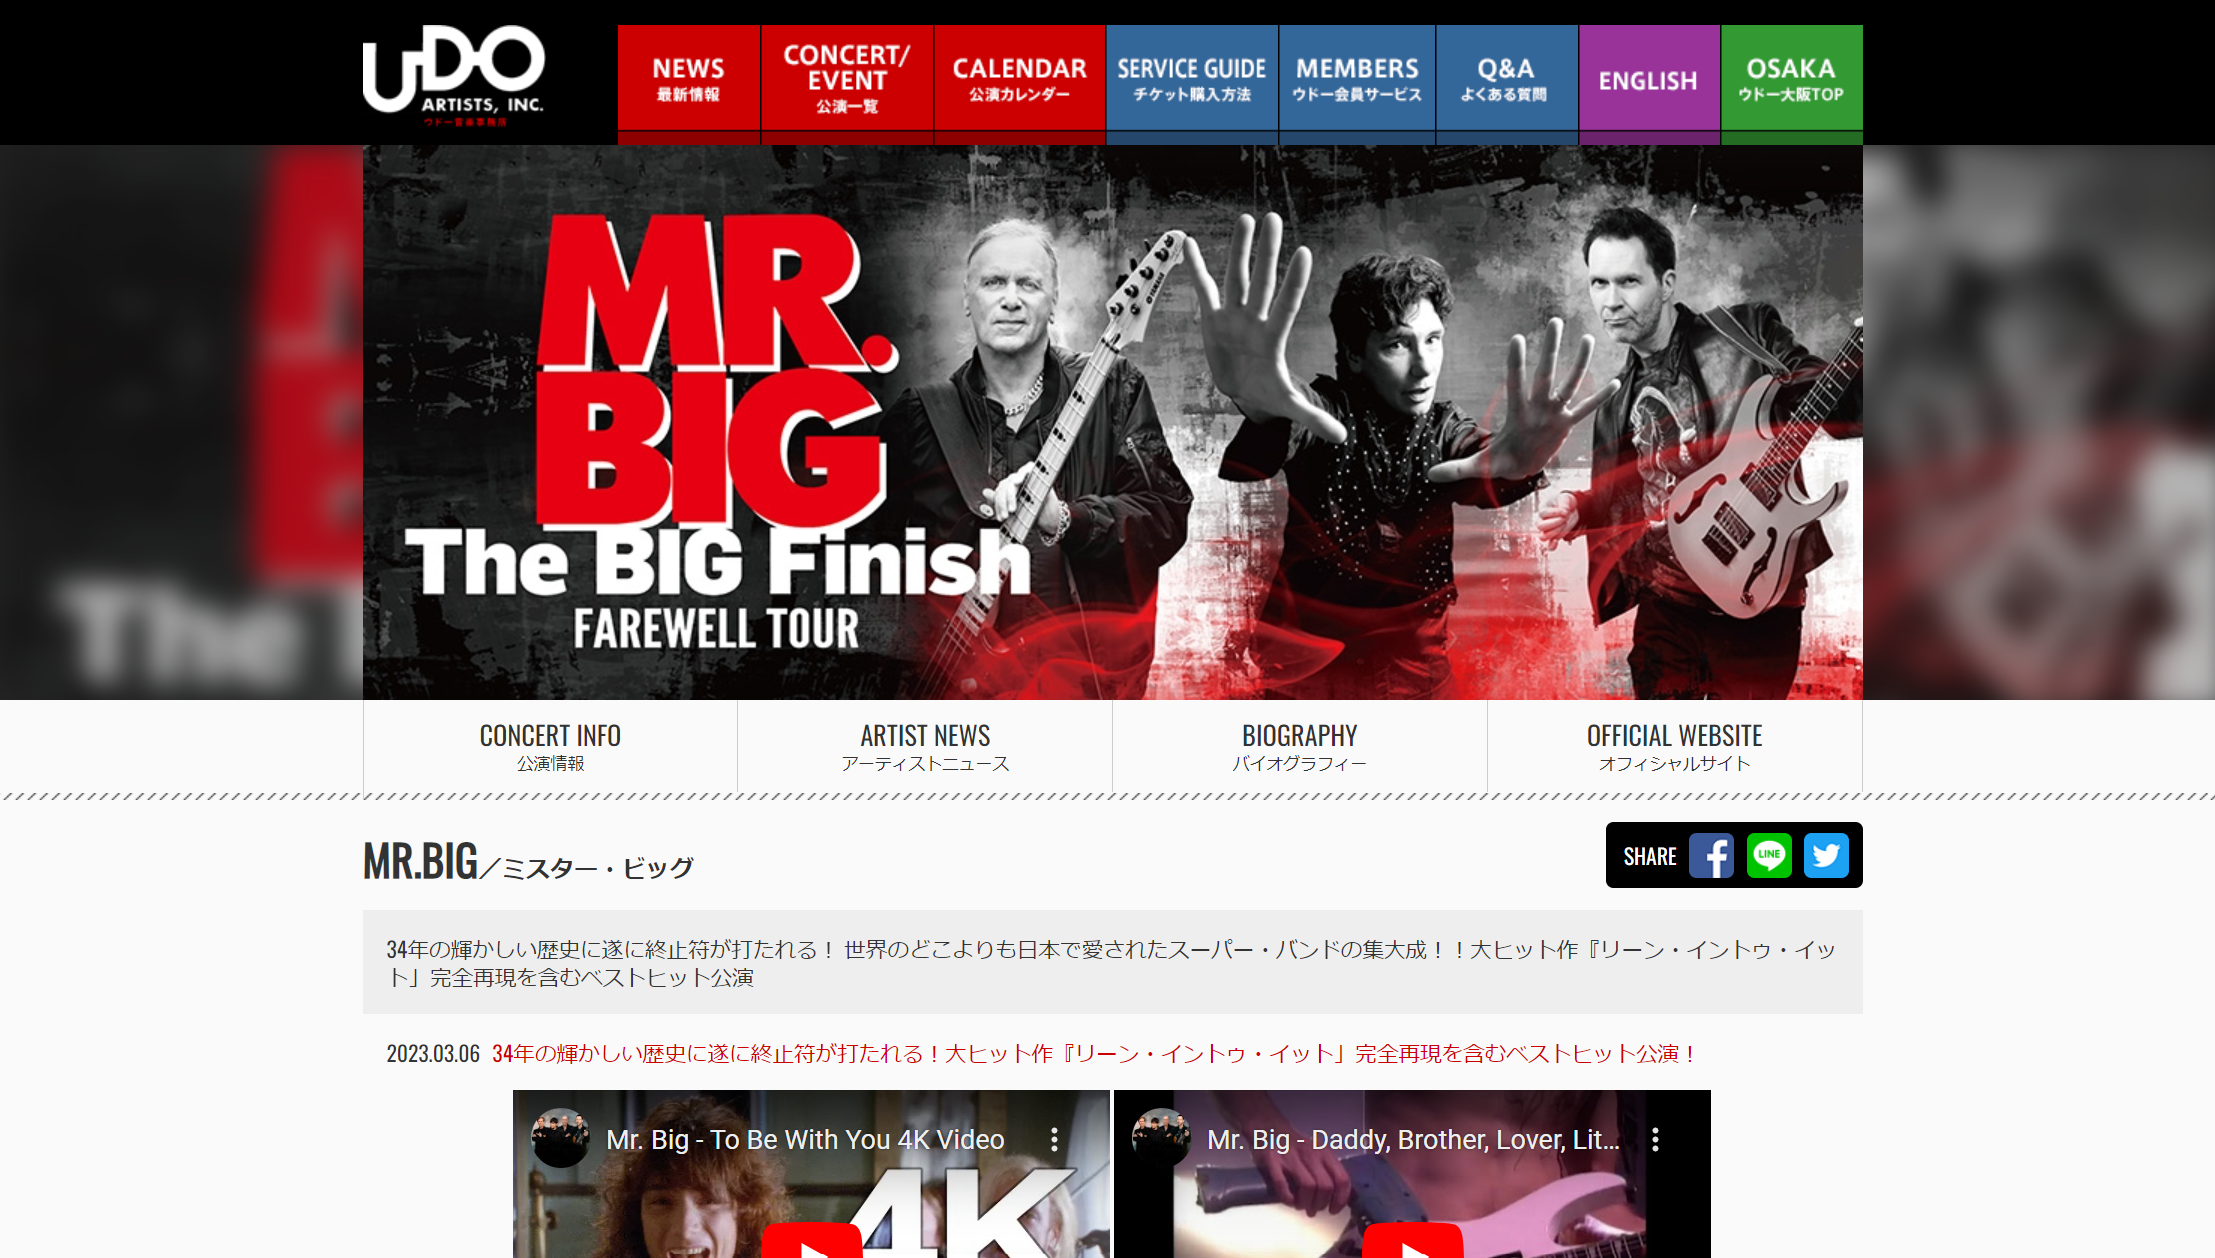 『MR.BIG The BIG Finish FAREWELL TOUR』の告知